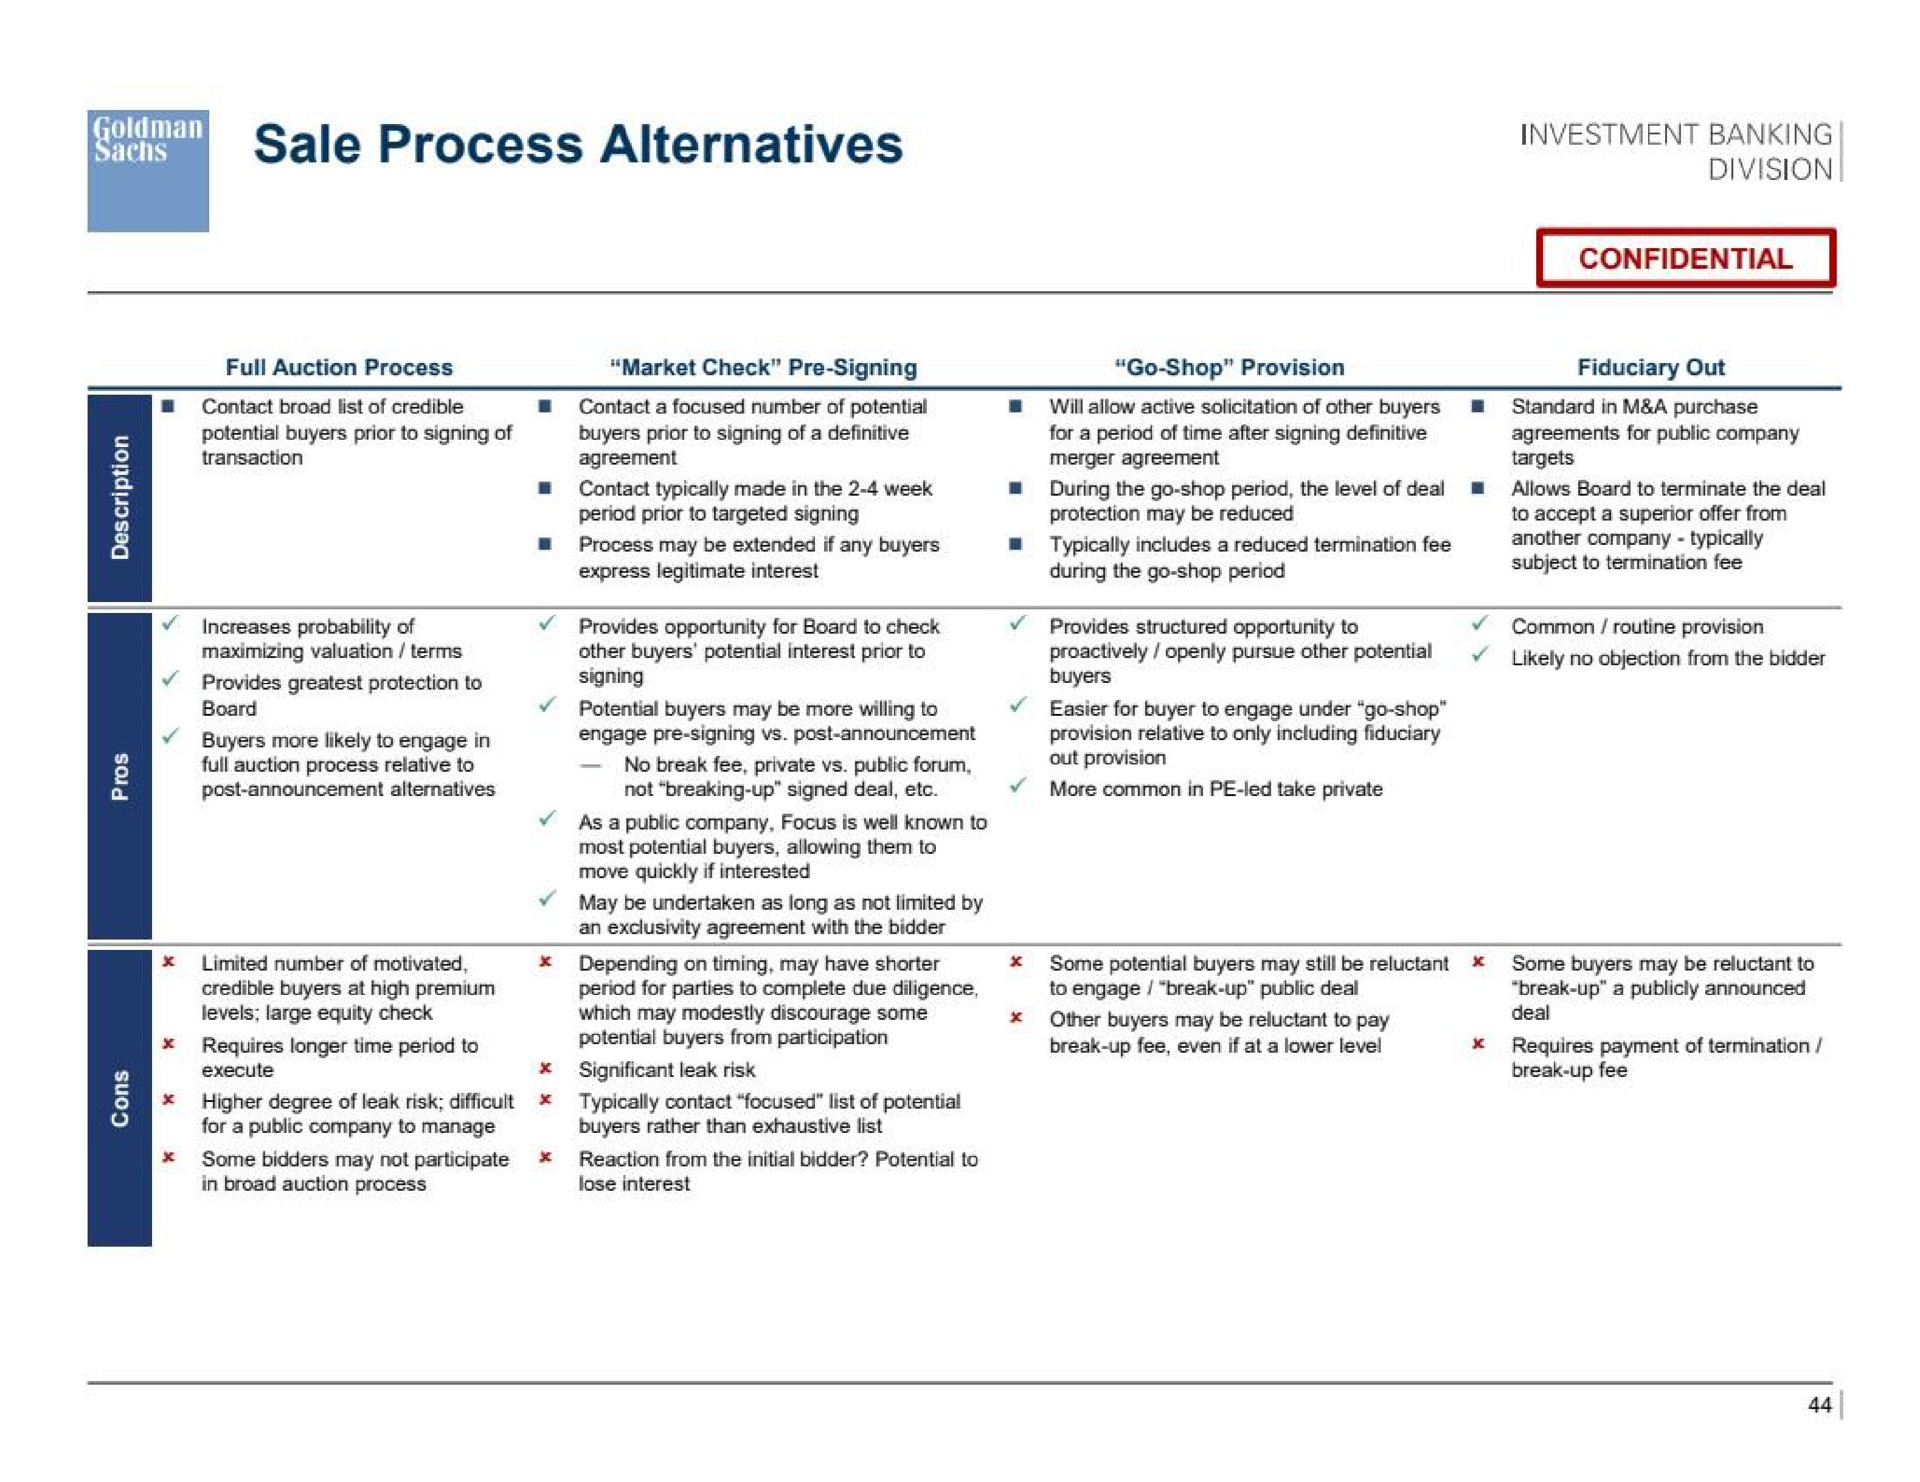 sale process alternatives | Goldman Sachs